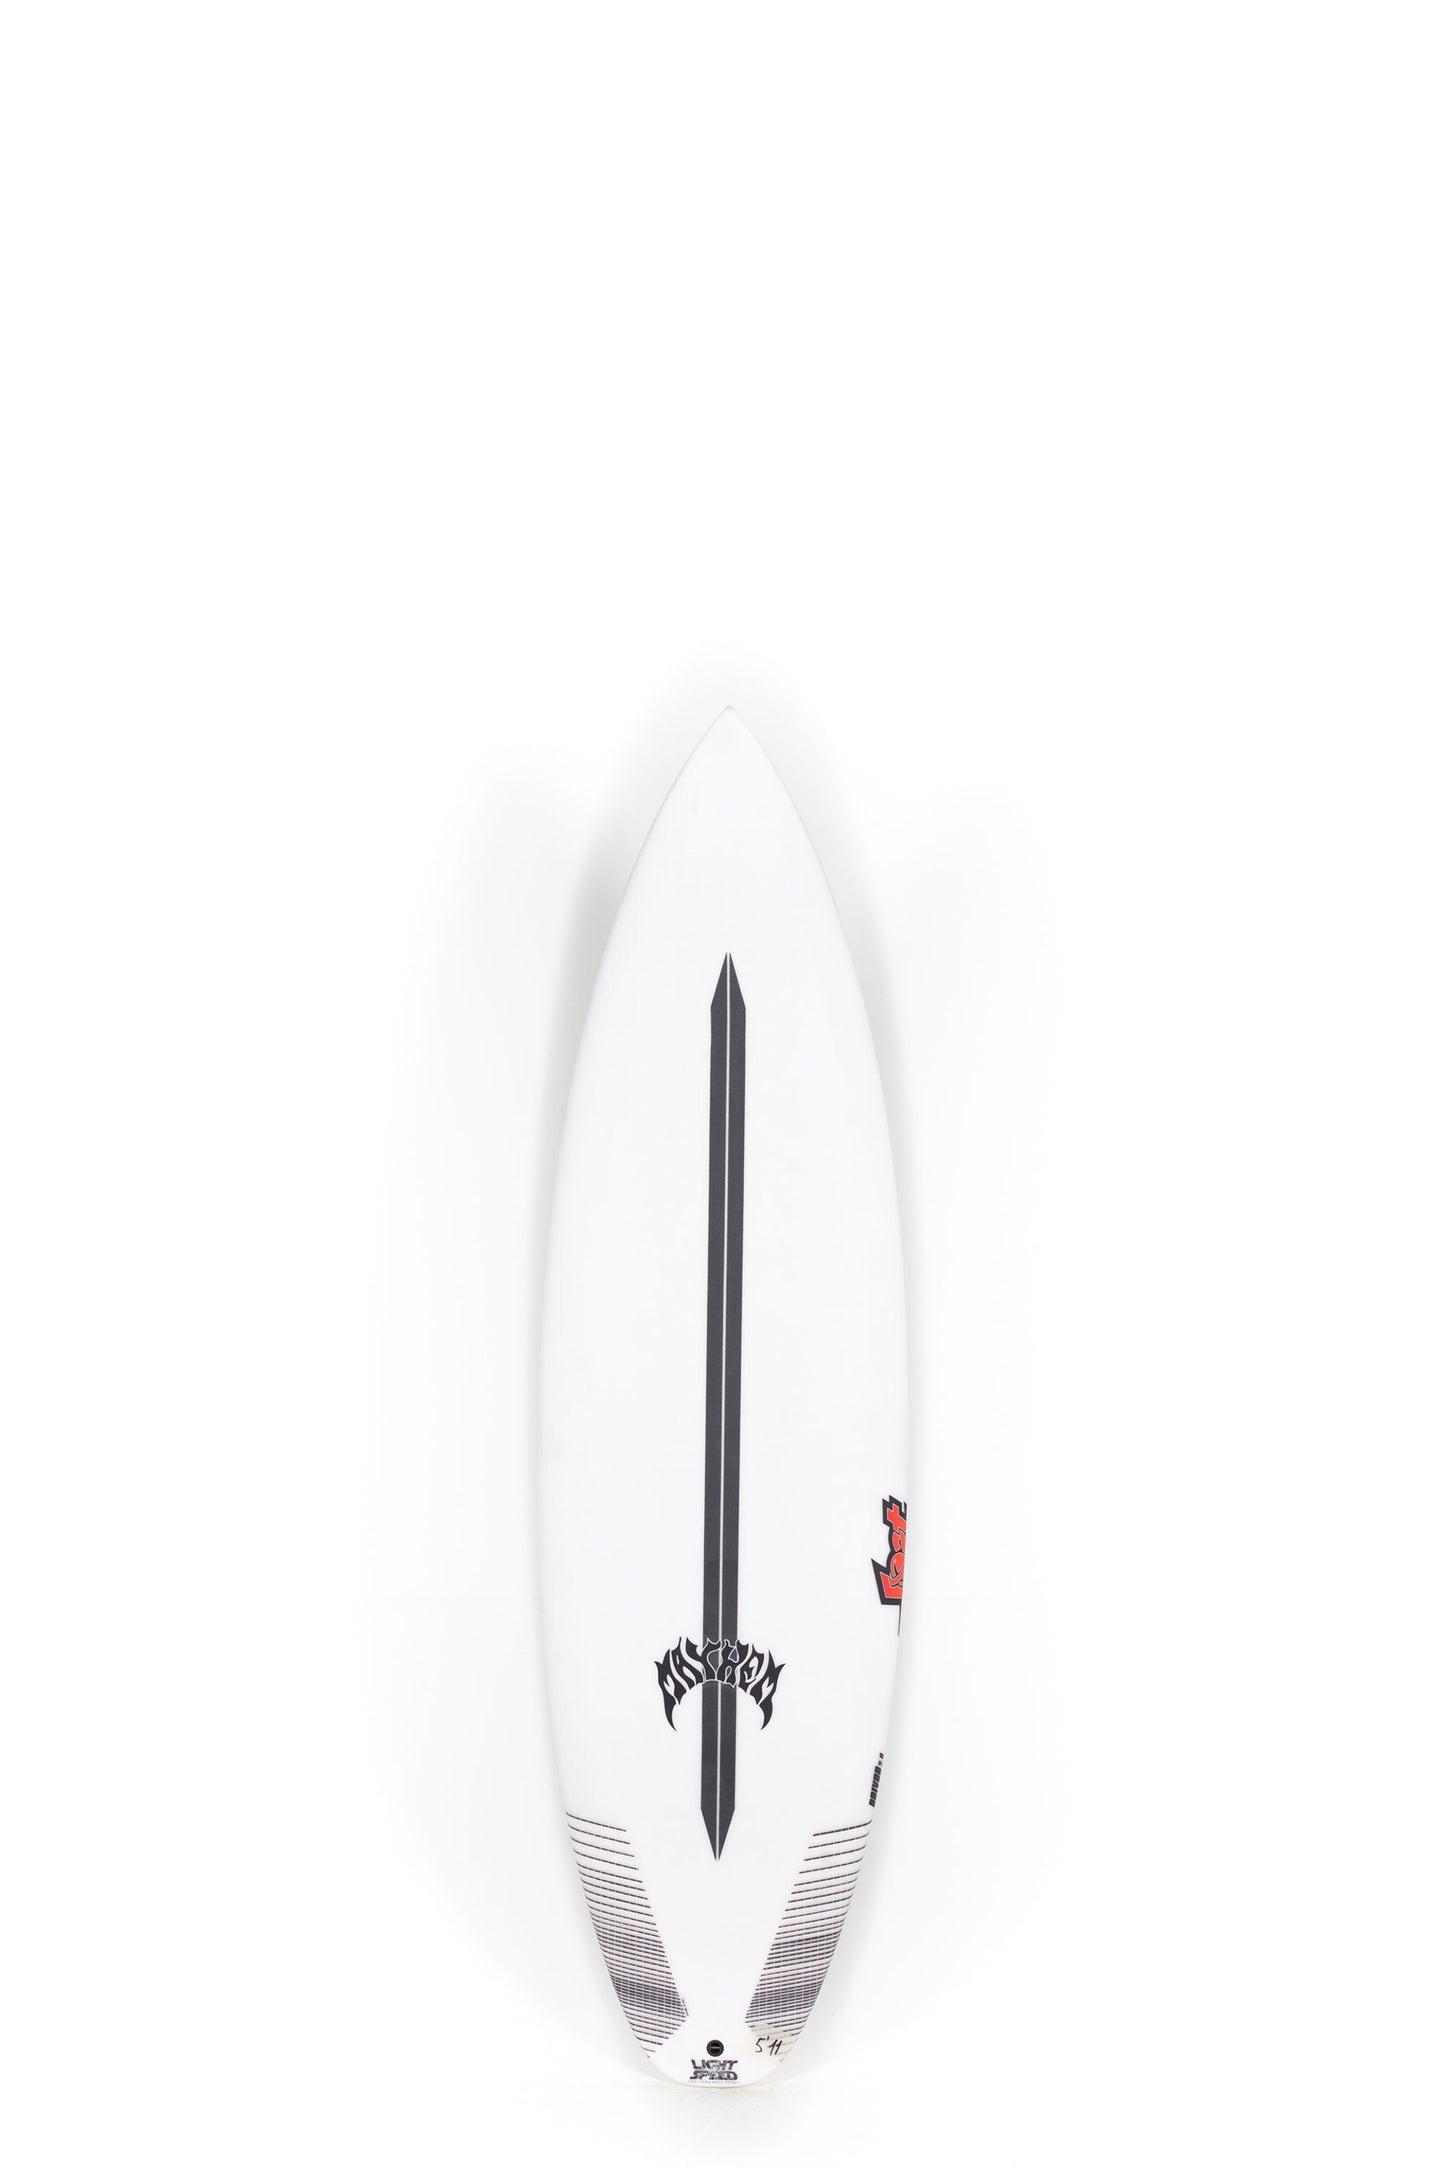 Pukas Surf Shop - Lost Surfboard - DRIVER 2.0 by Matt Biolos - Light Speed - 5’11” x 19,75 x 2,45 - 30,75L